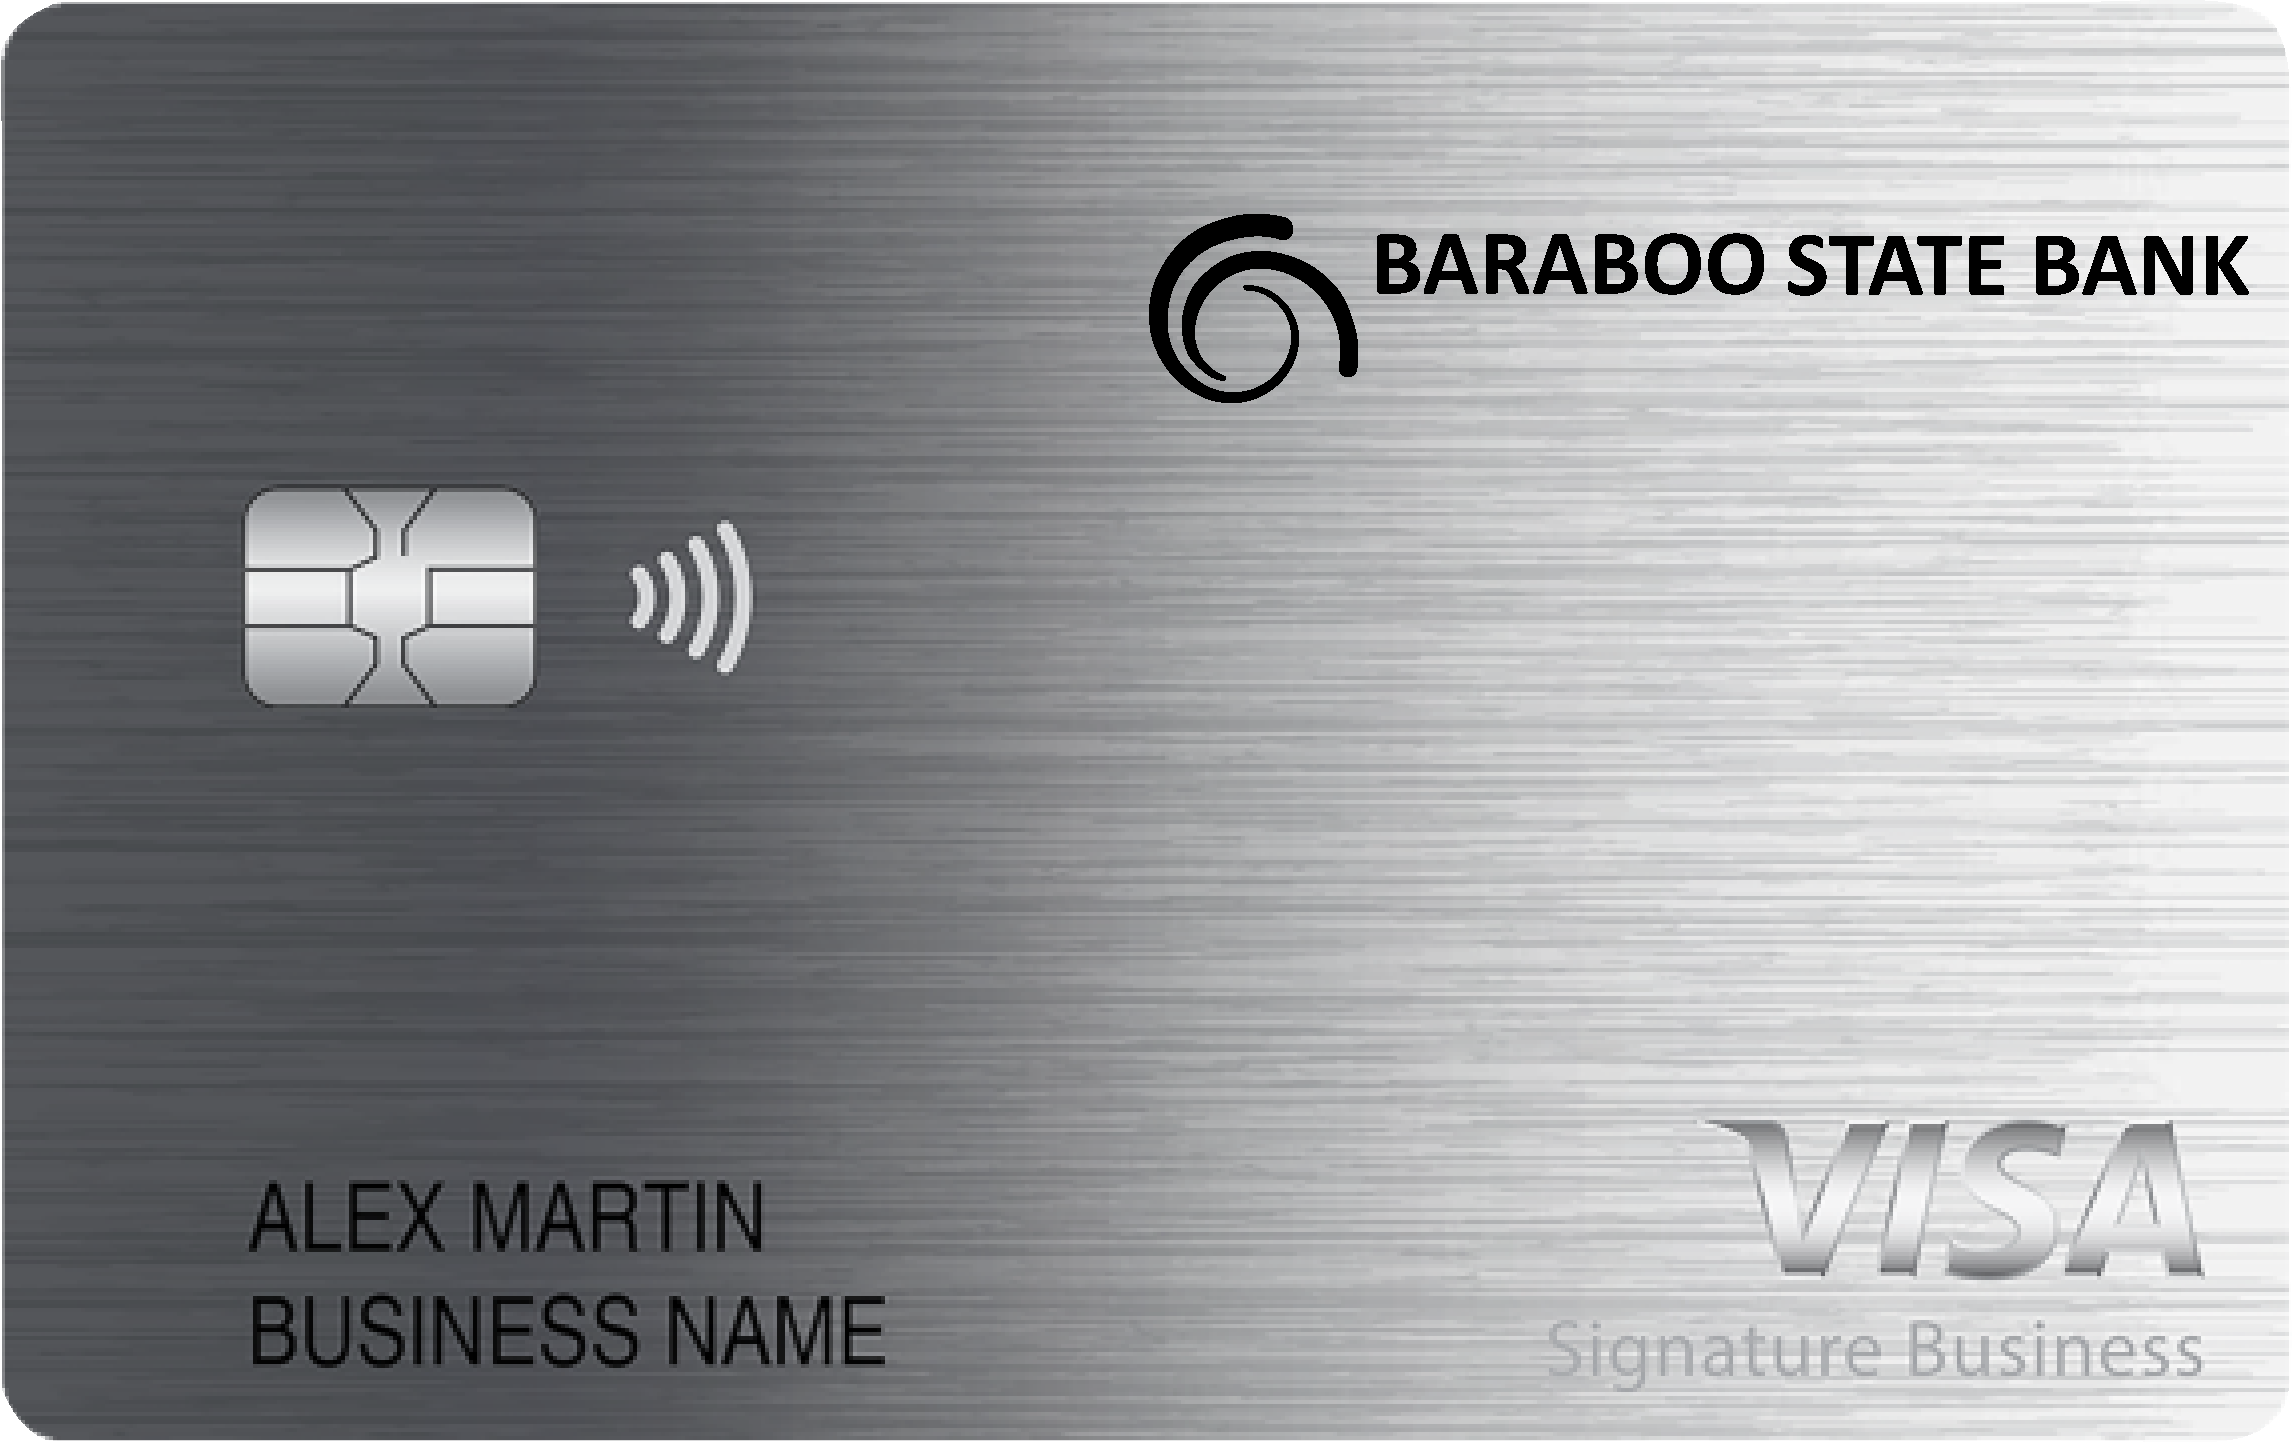 Baraboo State Bank Smart Business Rewards Card